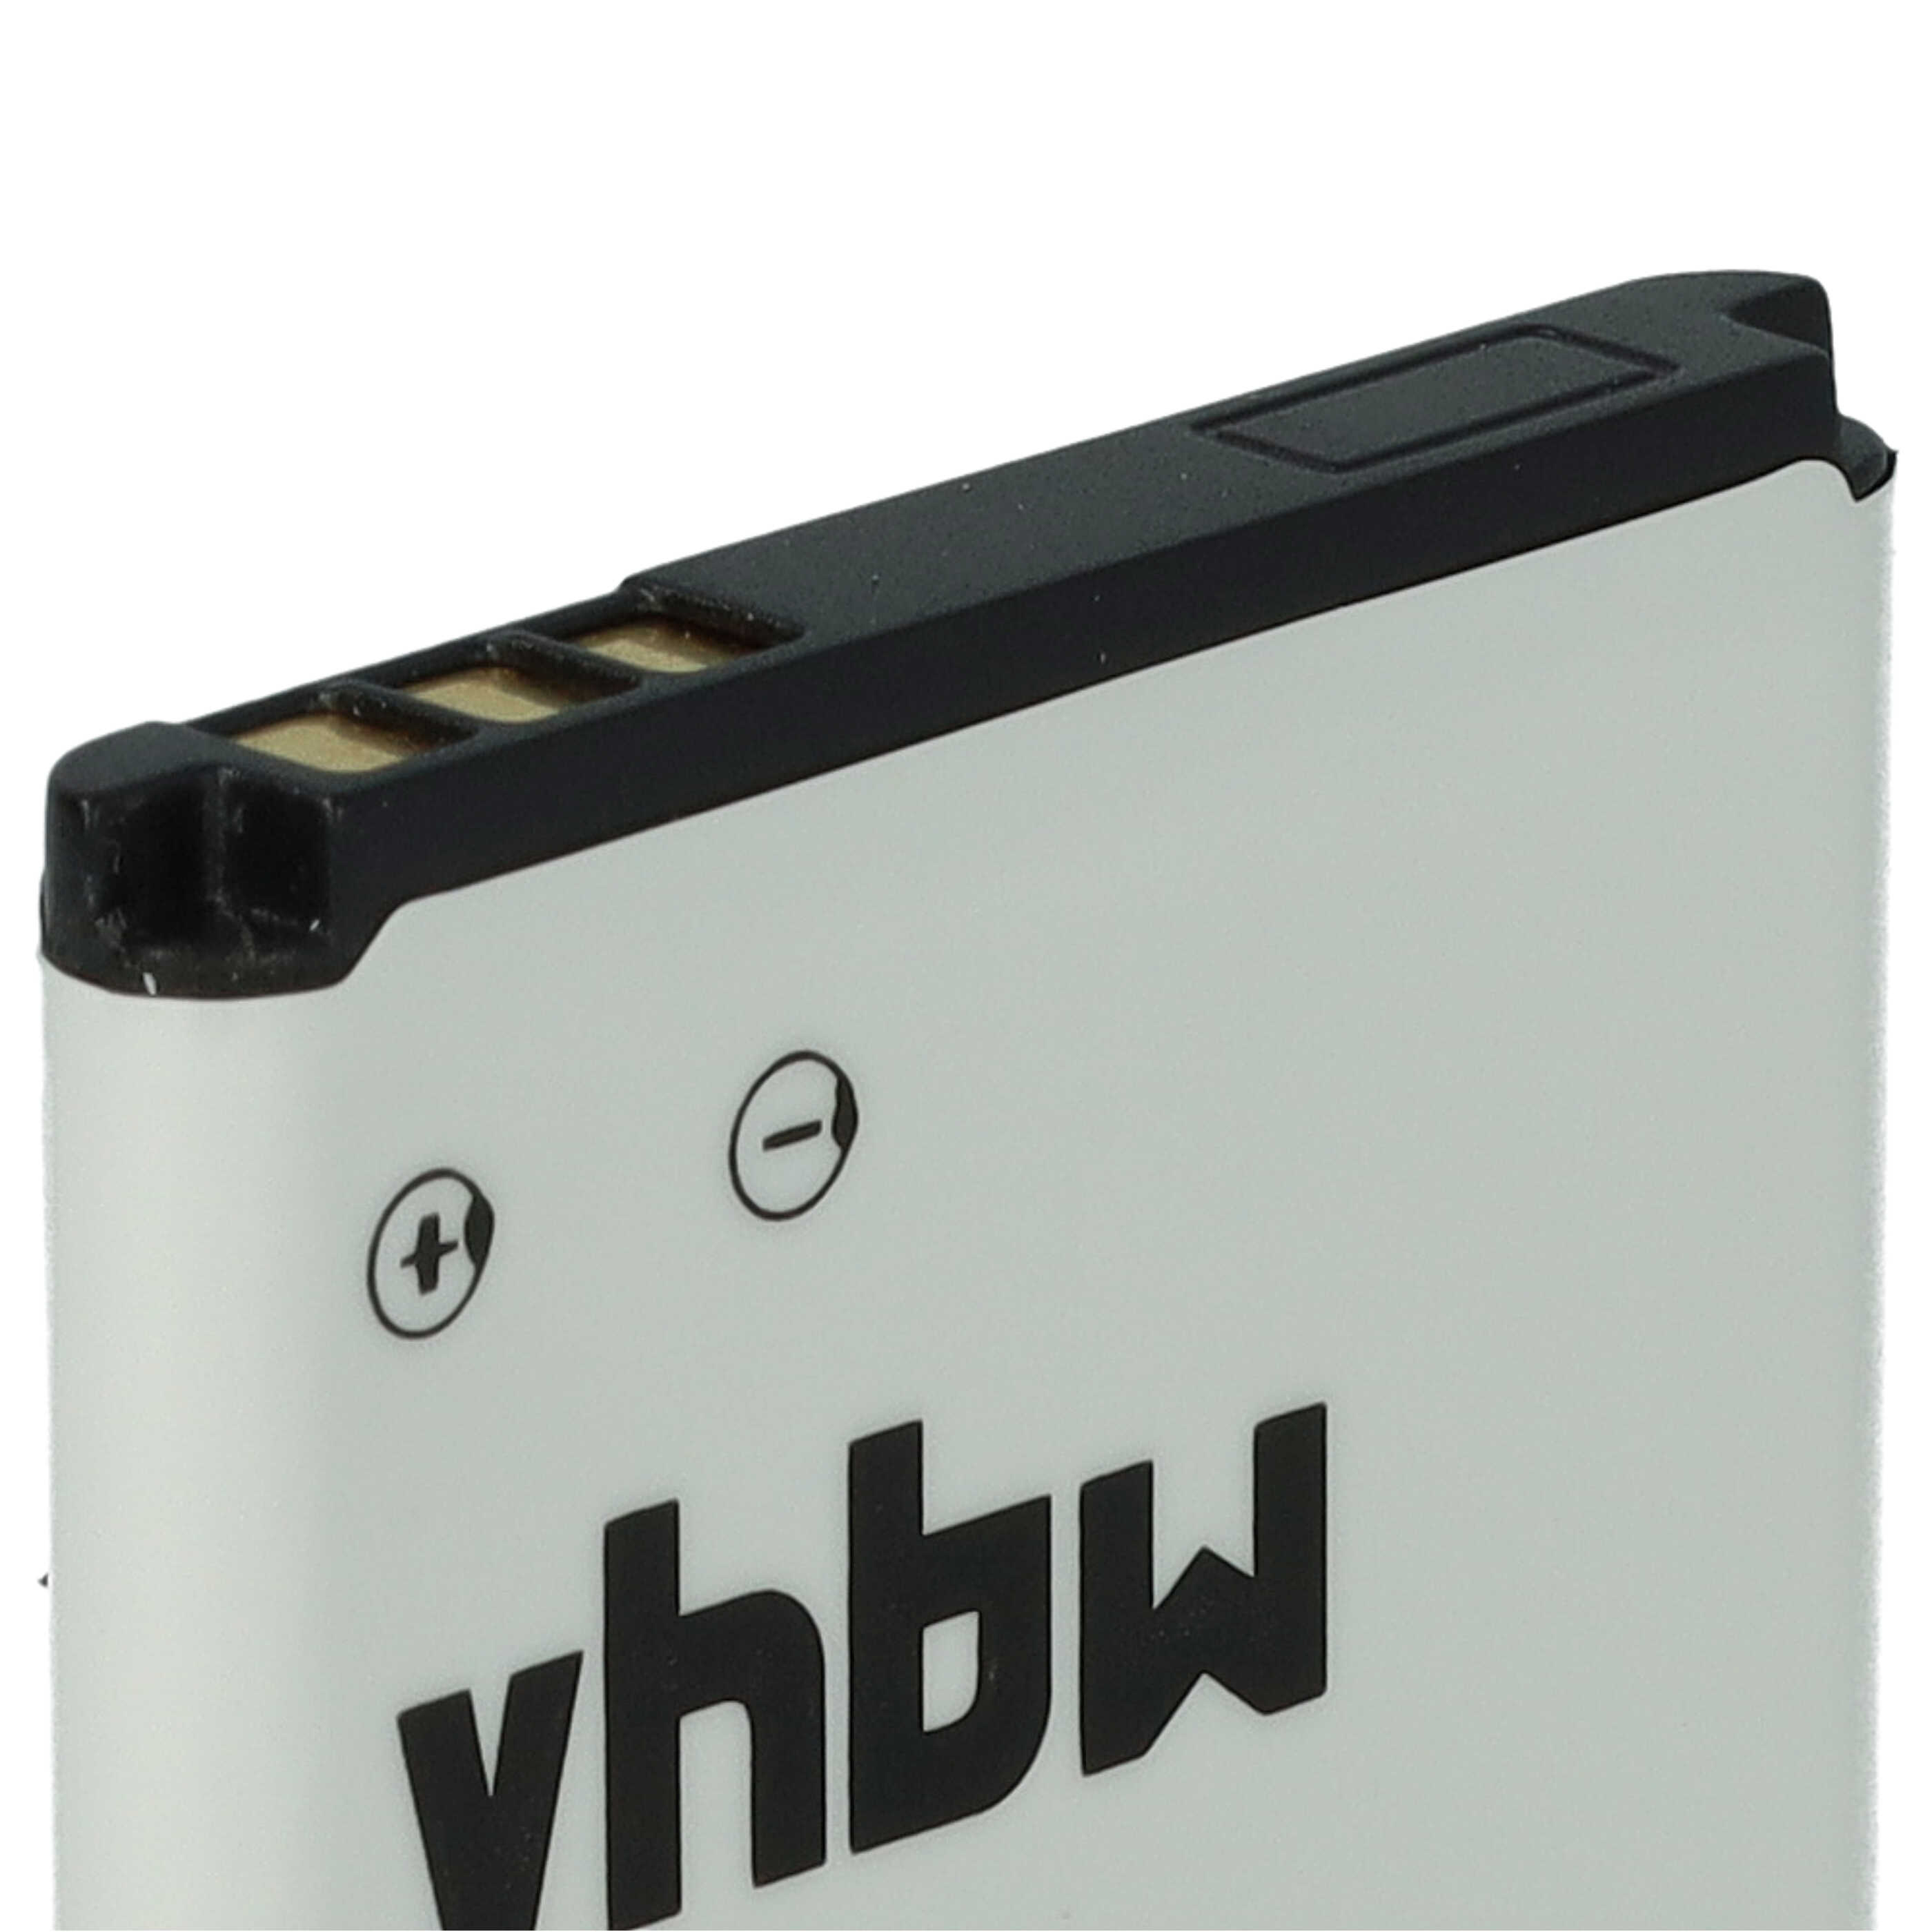 Mobile Phone Battery Replacement for BBK BL-4C - 900mAh 3.7V Li-Ion